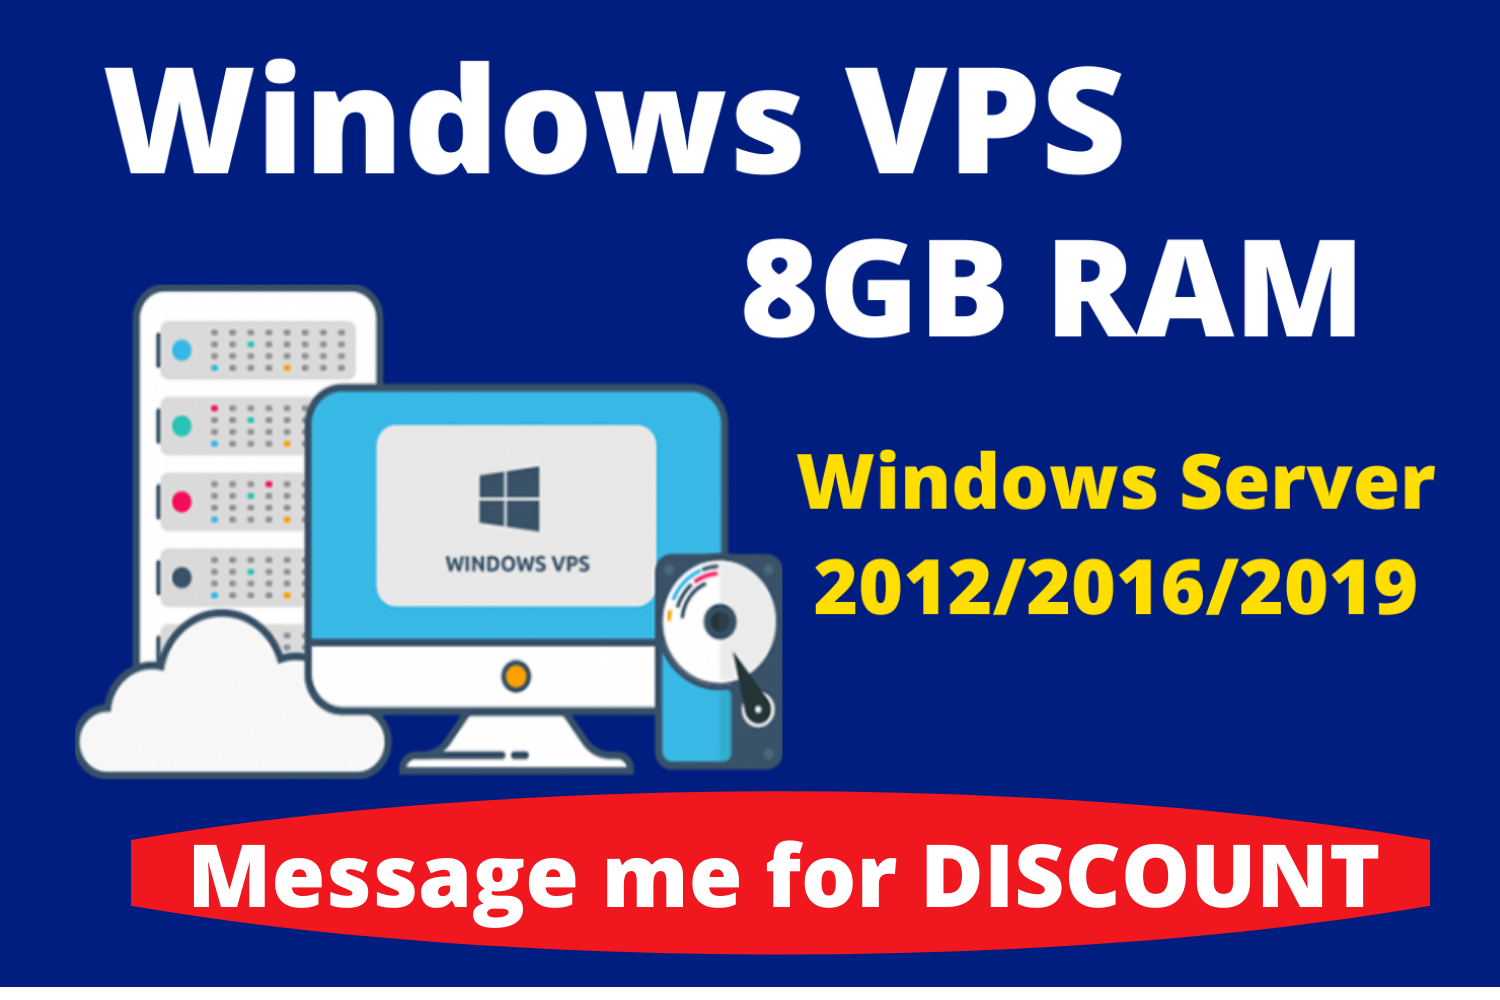 Windows Server 2012/2016/2019 RDP VPS 8GB RAM WITH 80 SSD 2vCPU